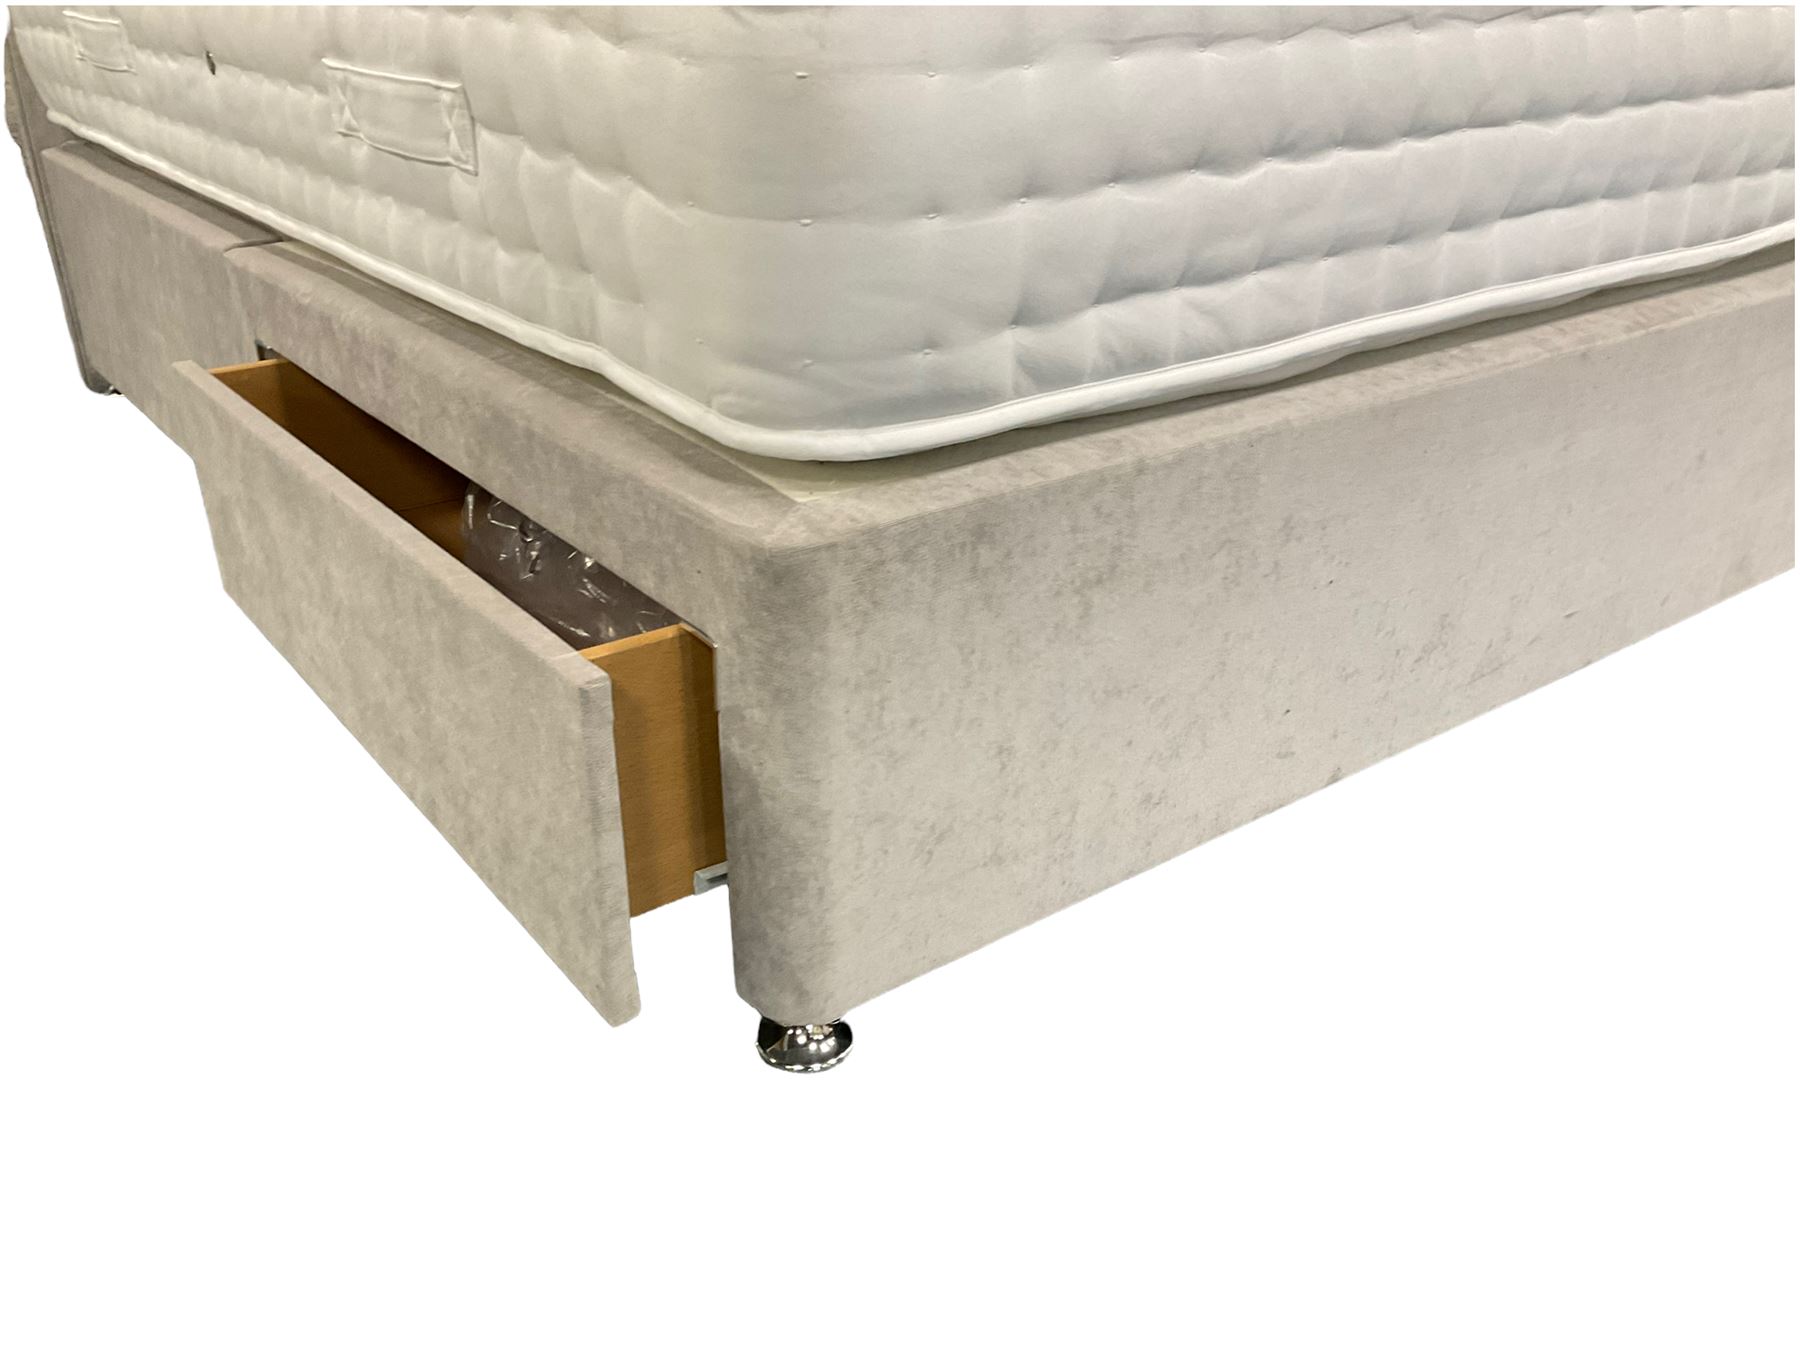 Highgrove - 4' 6' standard divan bed with headboard - Image 4 of 5